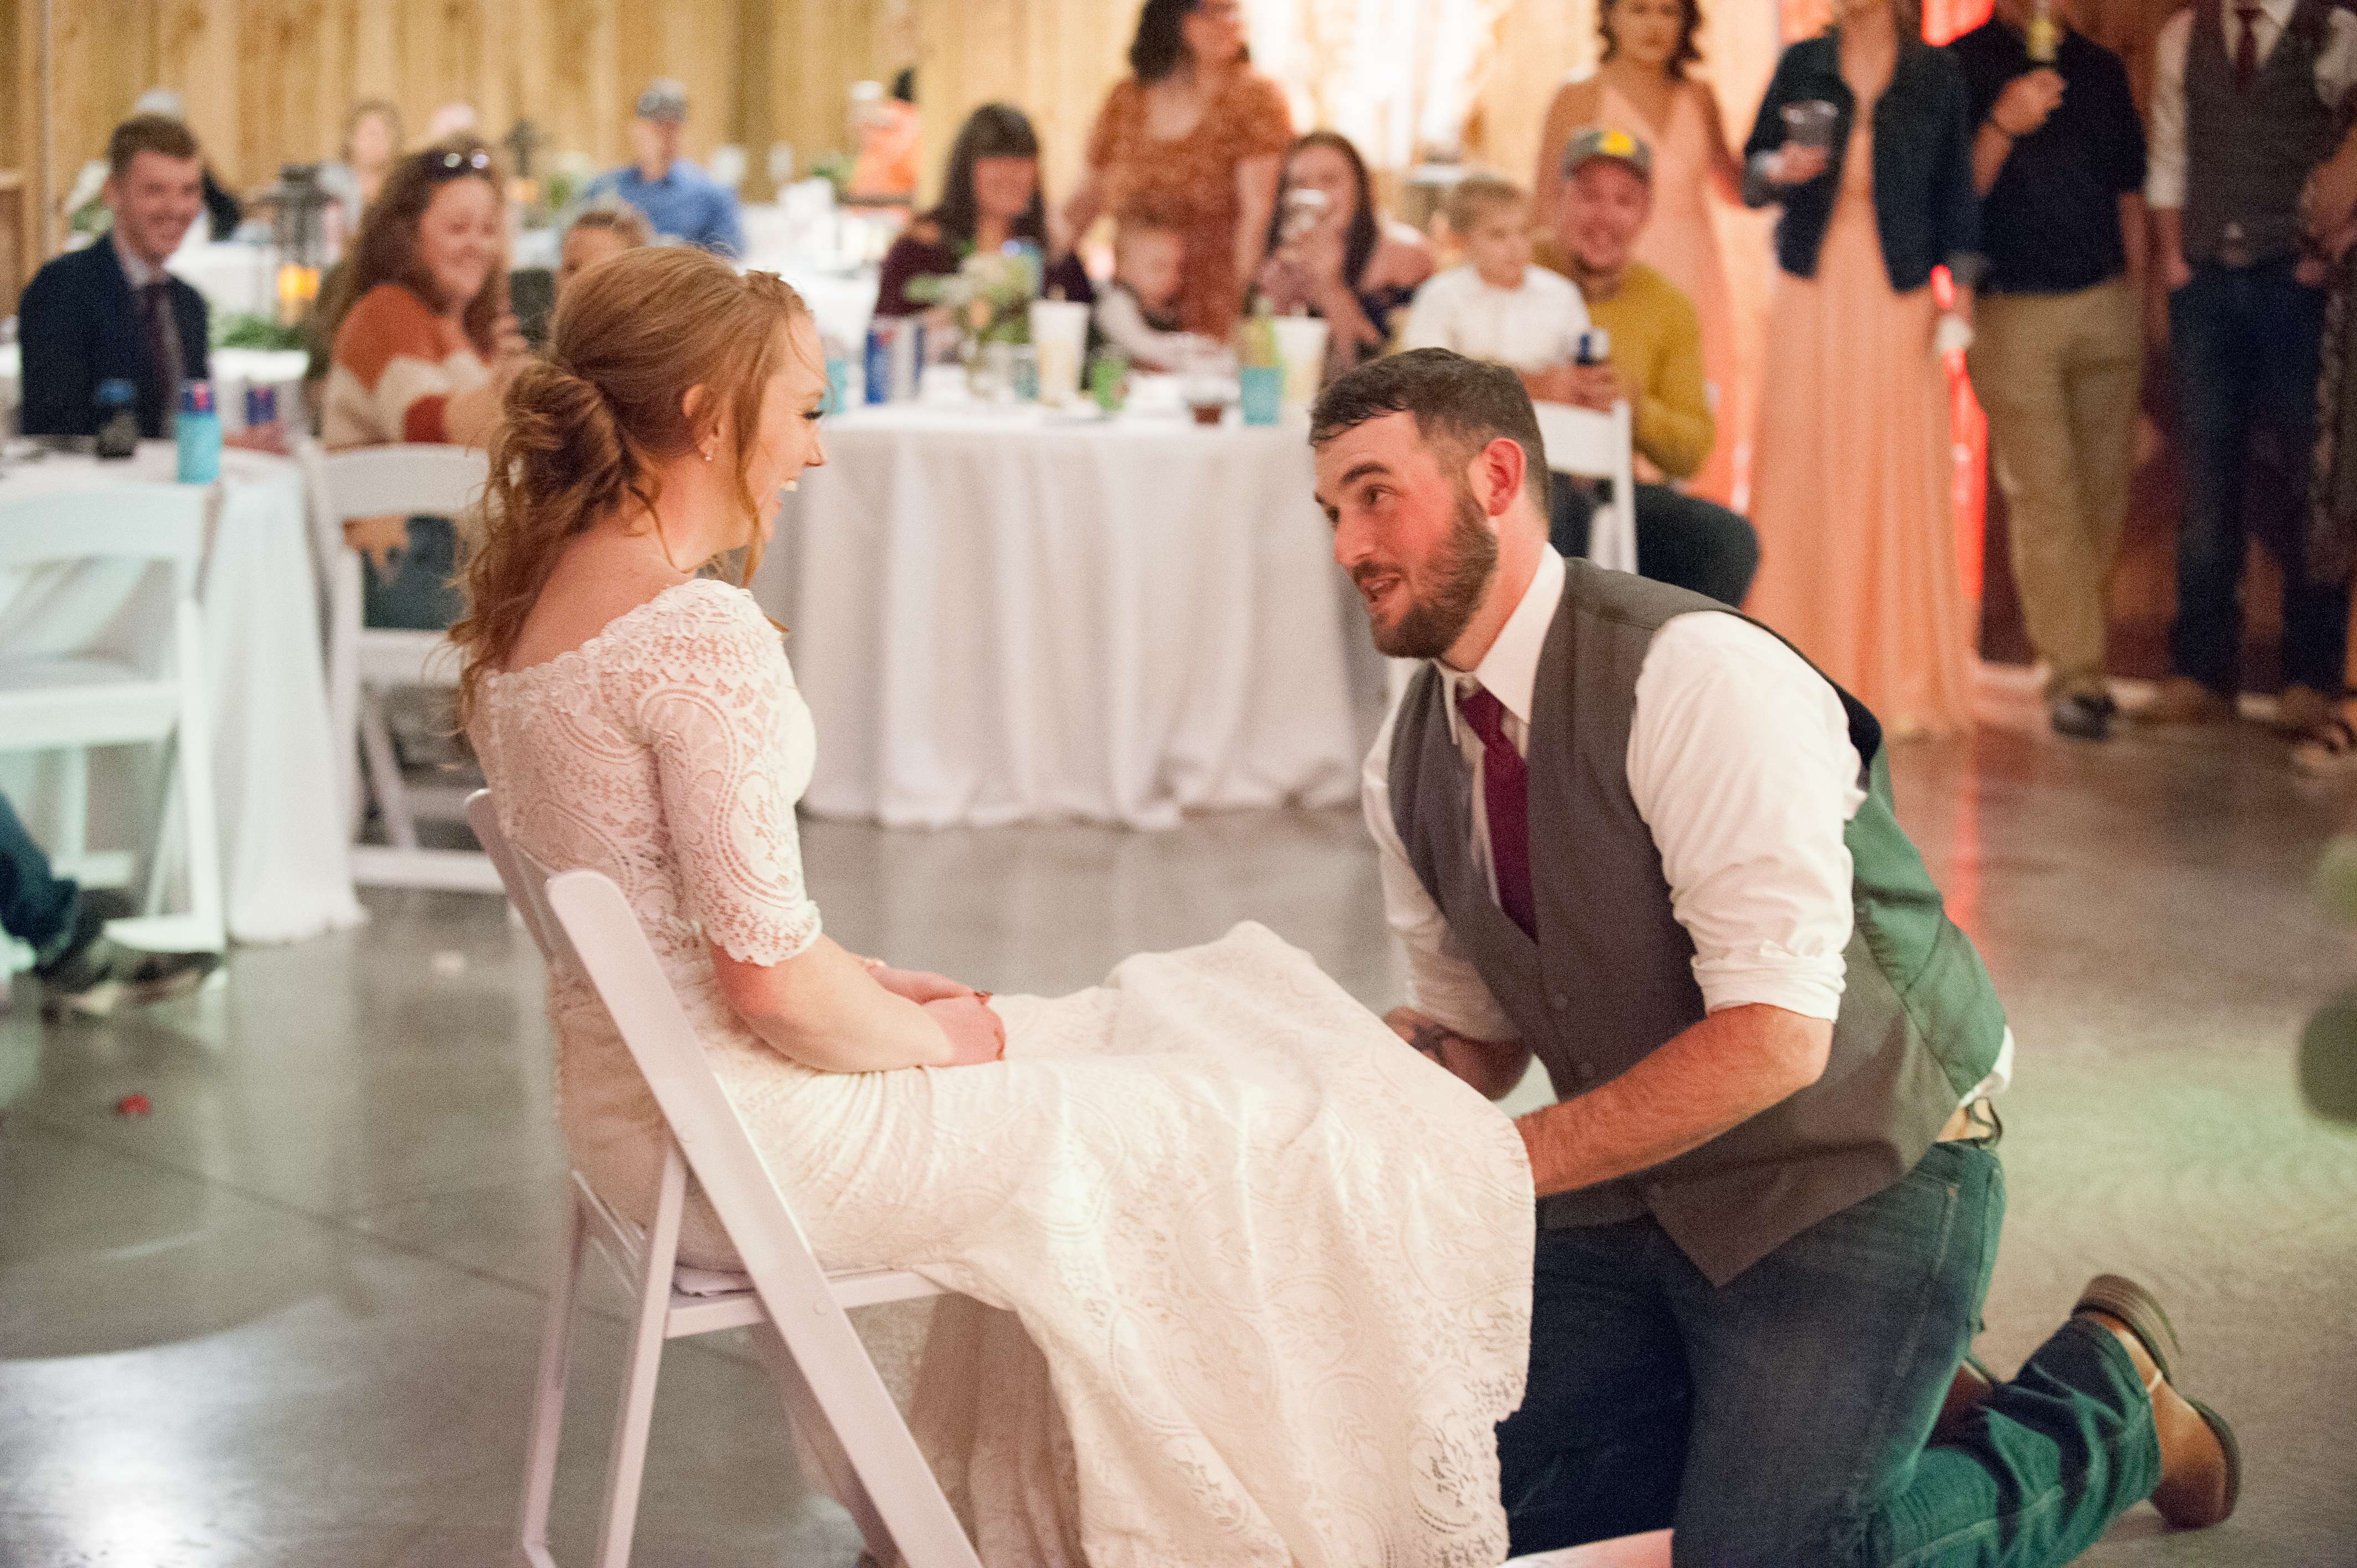 Groom removing bride's garter at wedding reception near Springfield, Missouri.